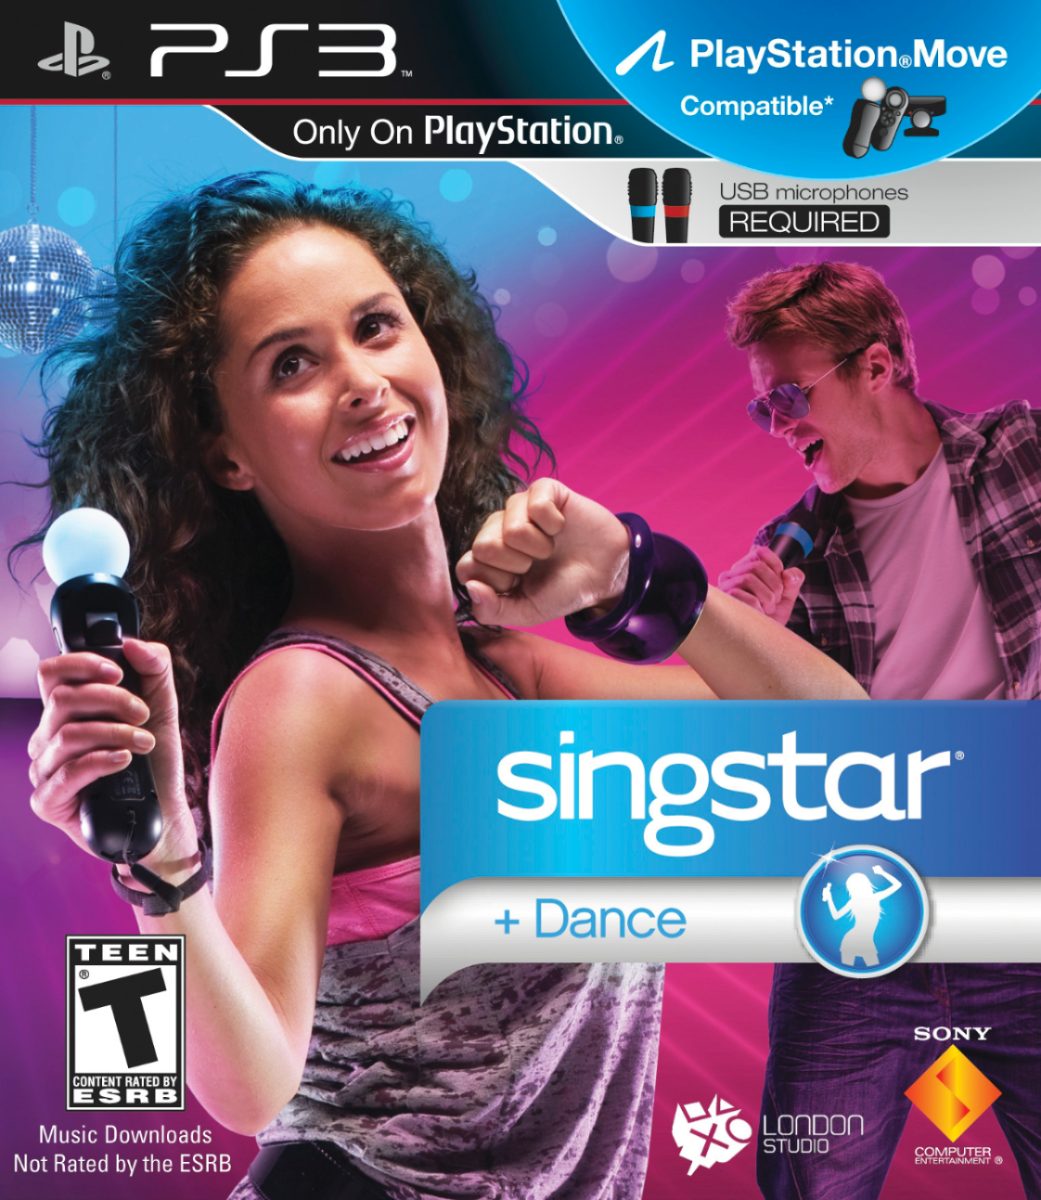 SingStar Dance Picture